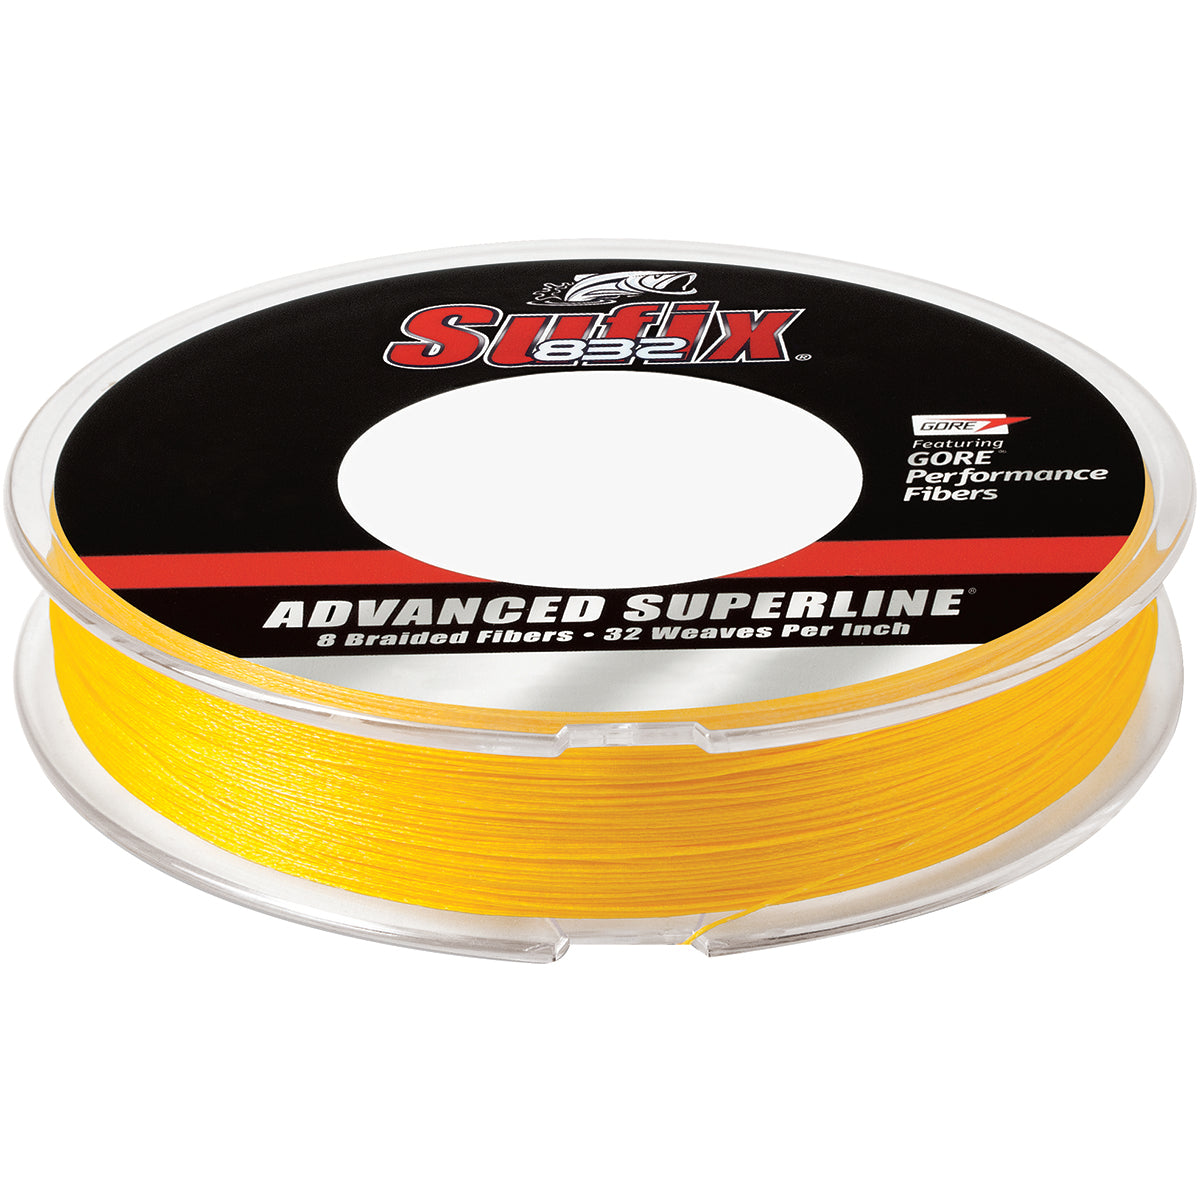 Sufix 150 Yard 832 Advanced Superline Braid Fishing Line - 8 lb. - Hi-Vis Yellow Sufix